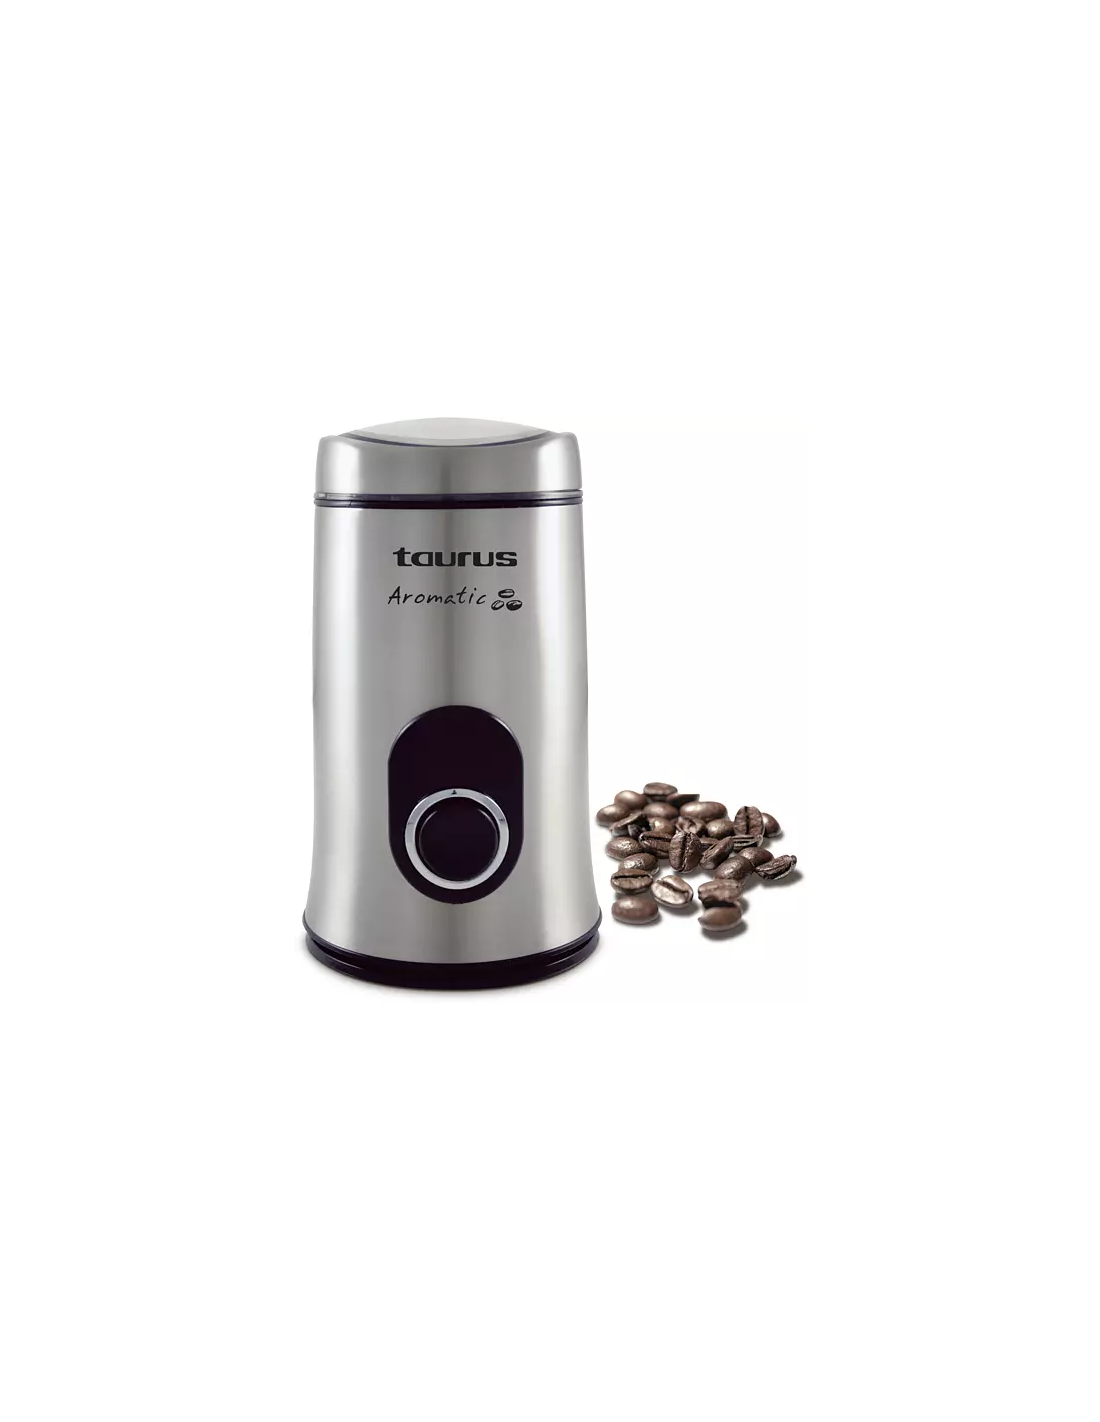 Comprar Molinillo de café Taurus Aromatic en acero inoxidable · Hipercor